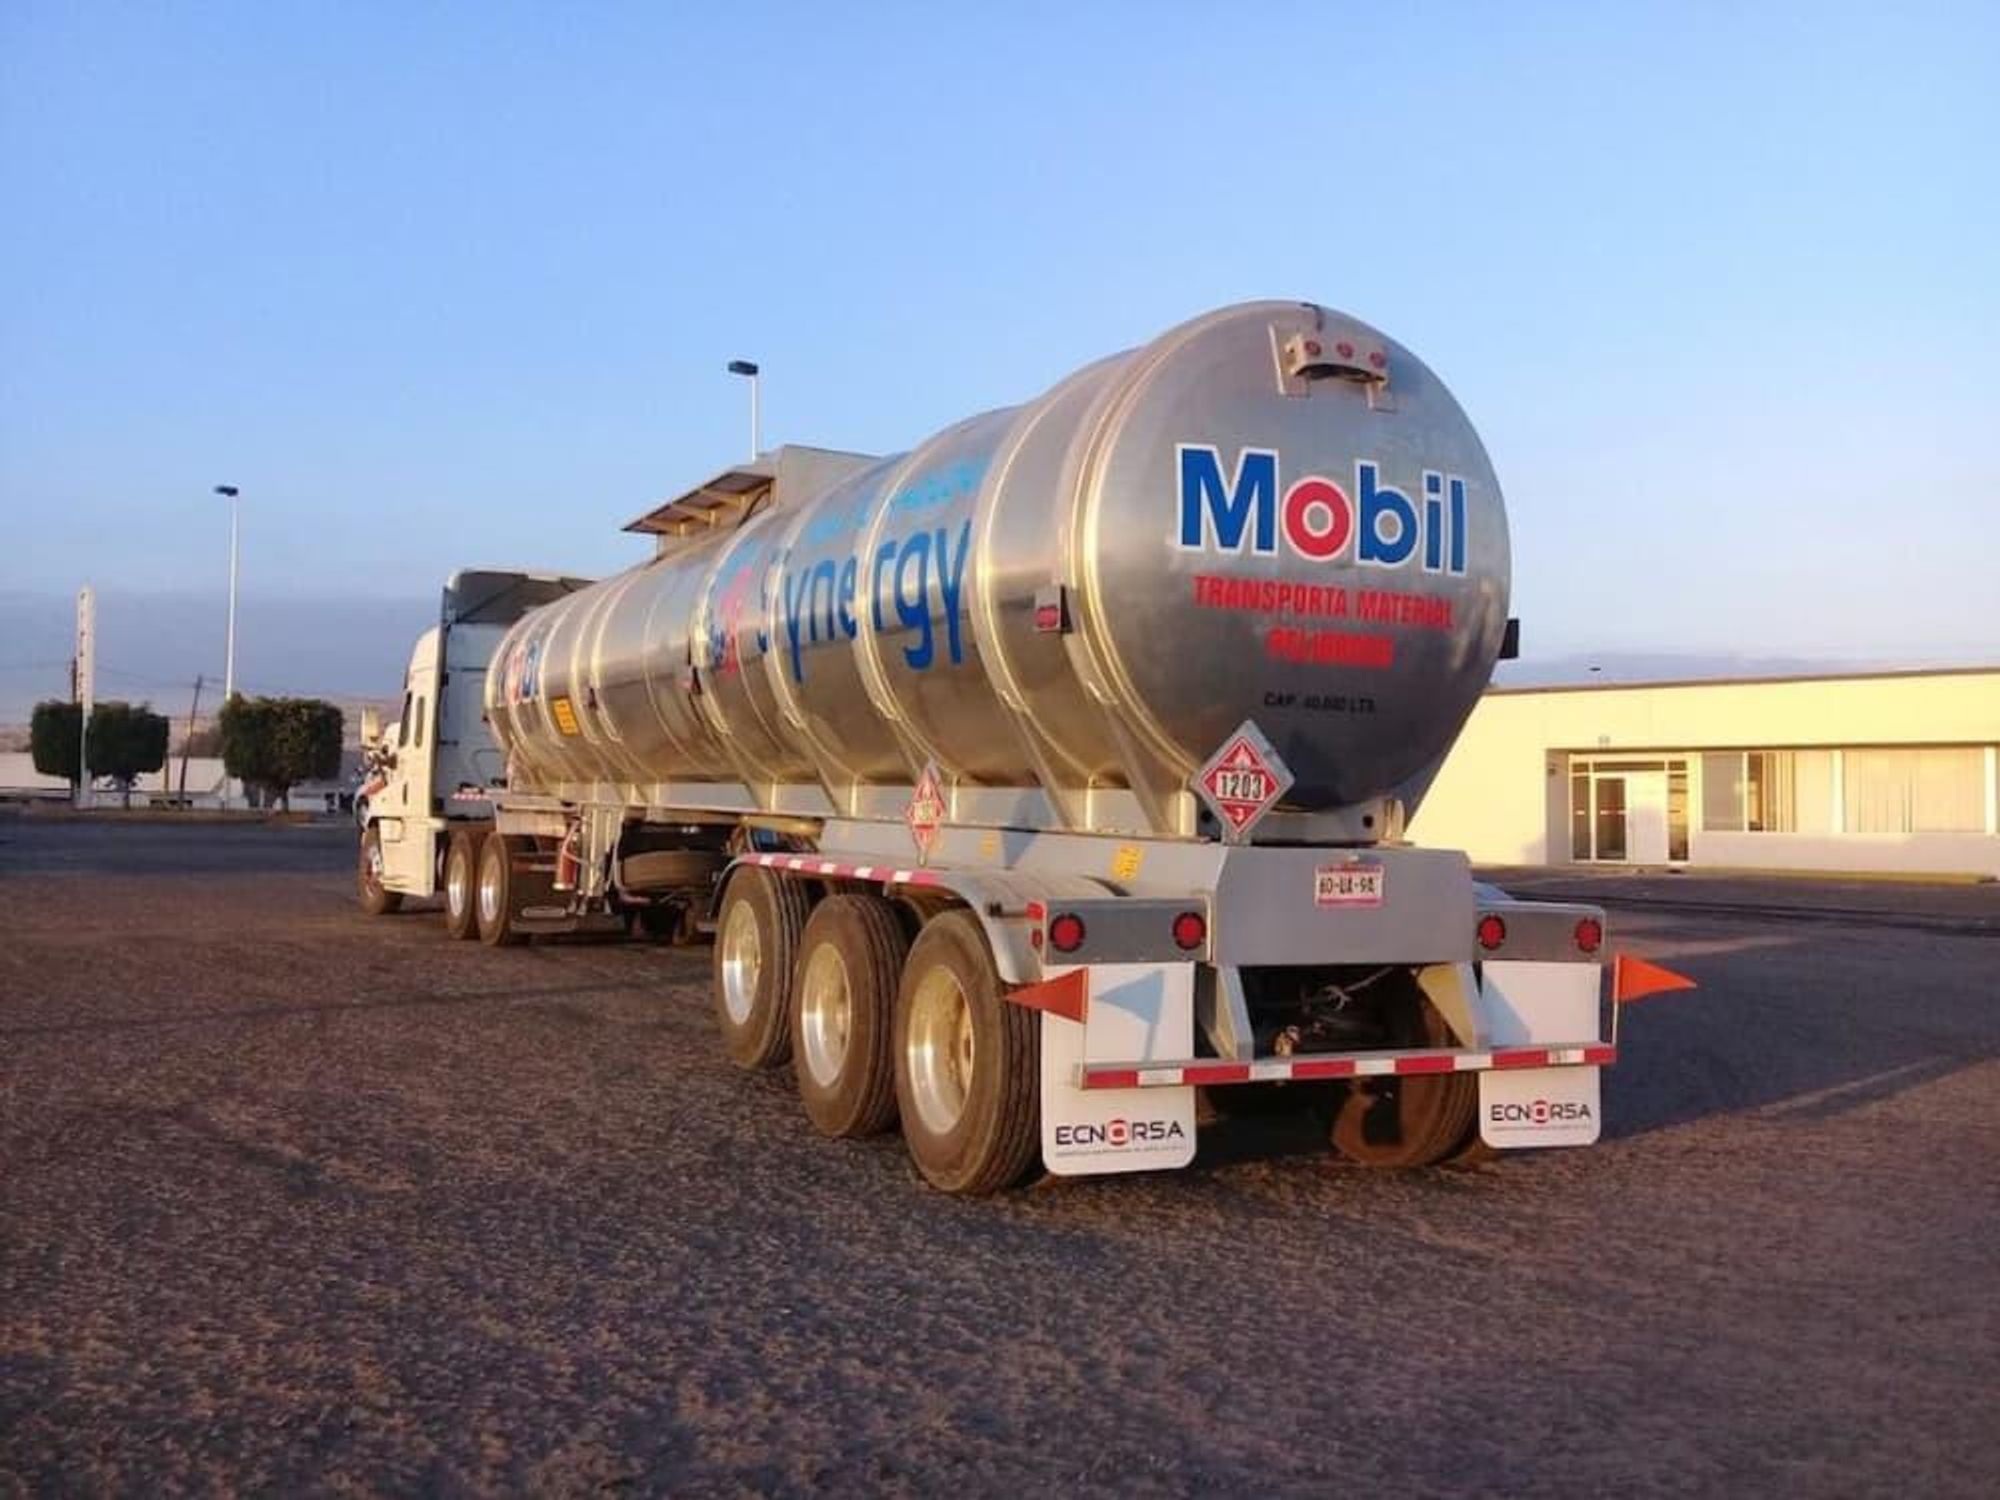 Exxon Mobil truck